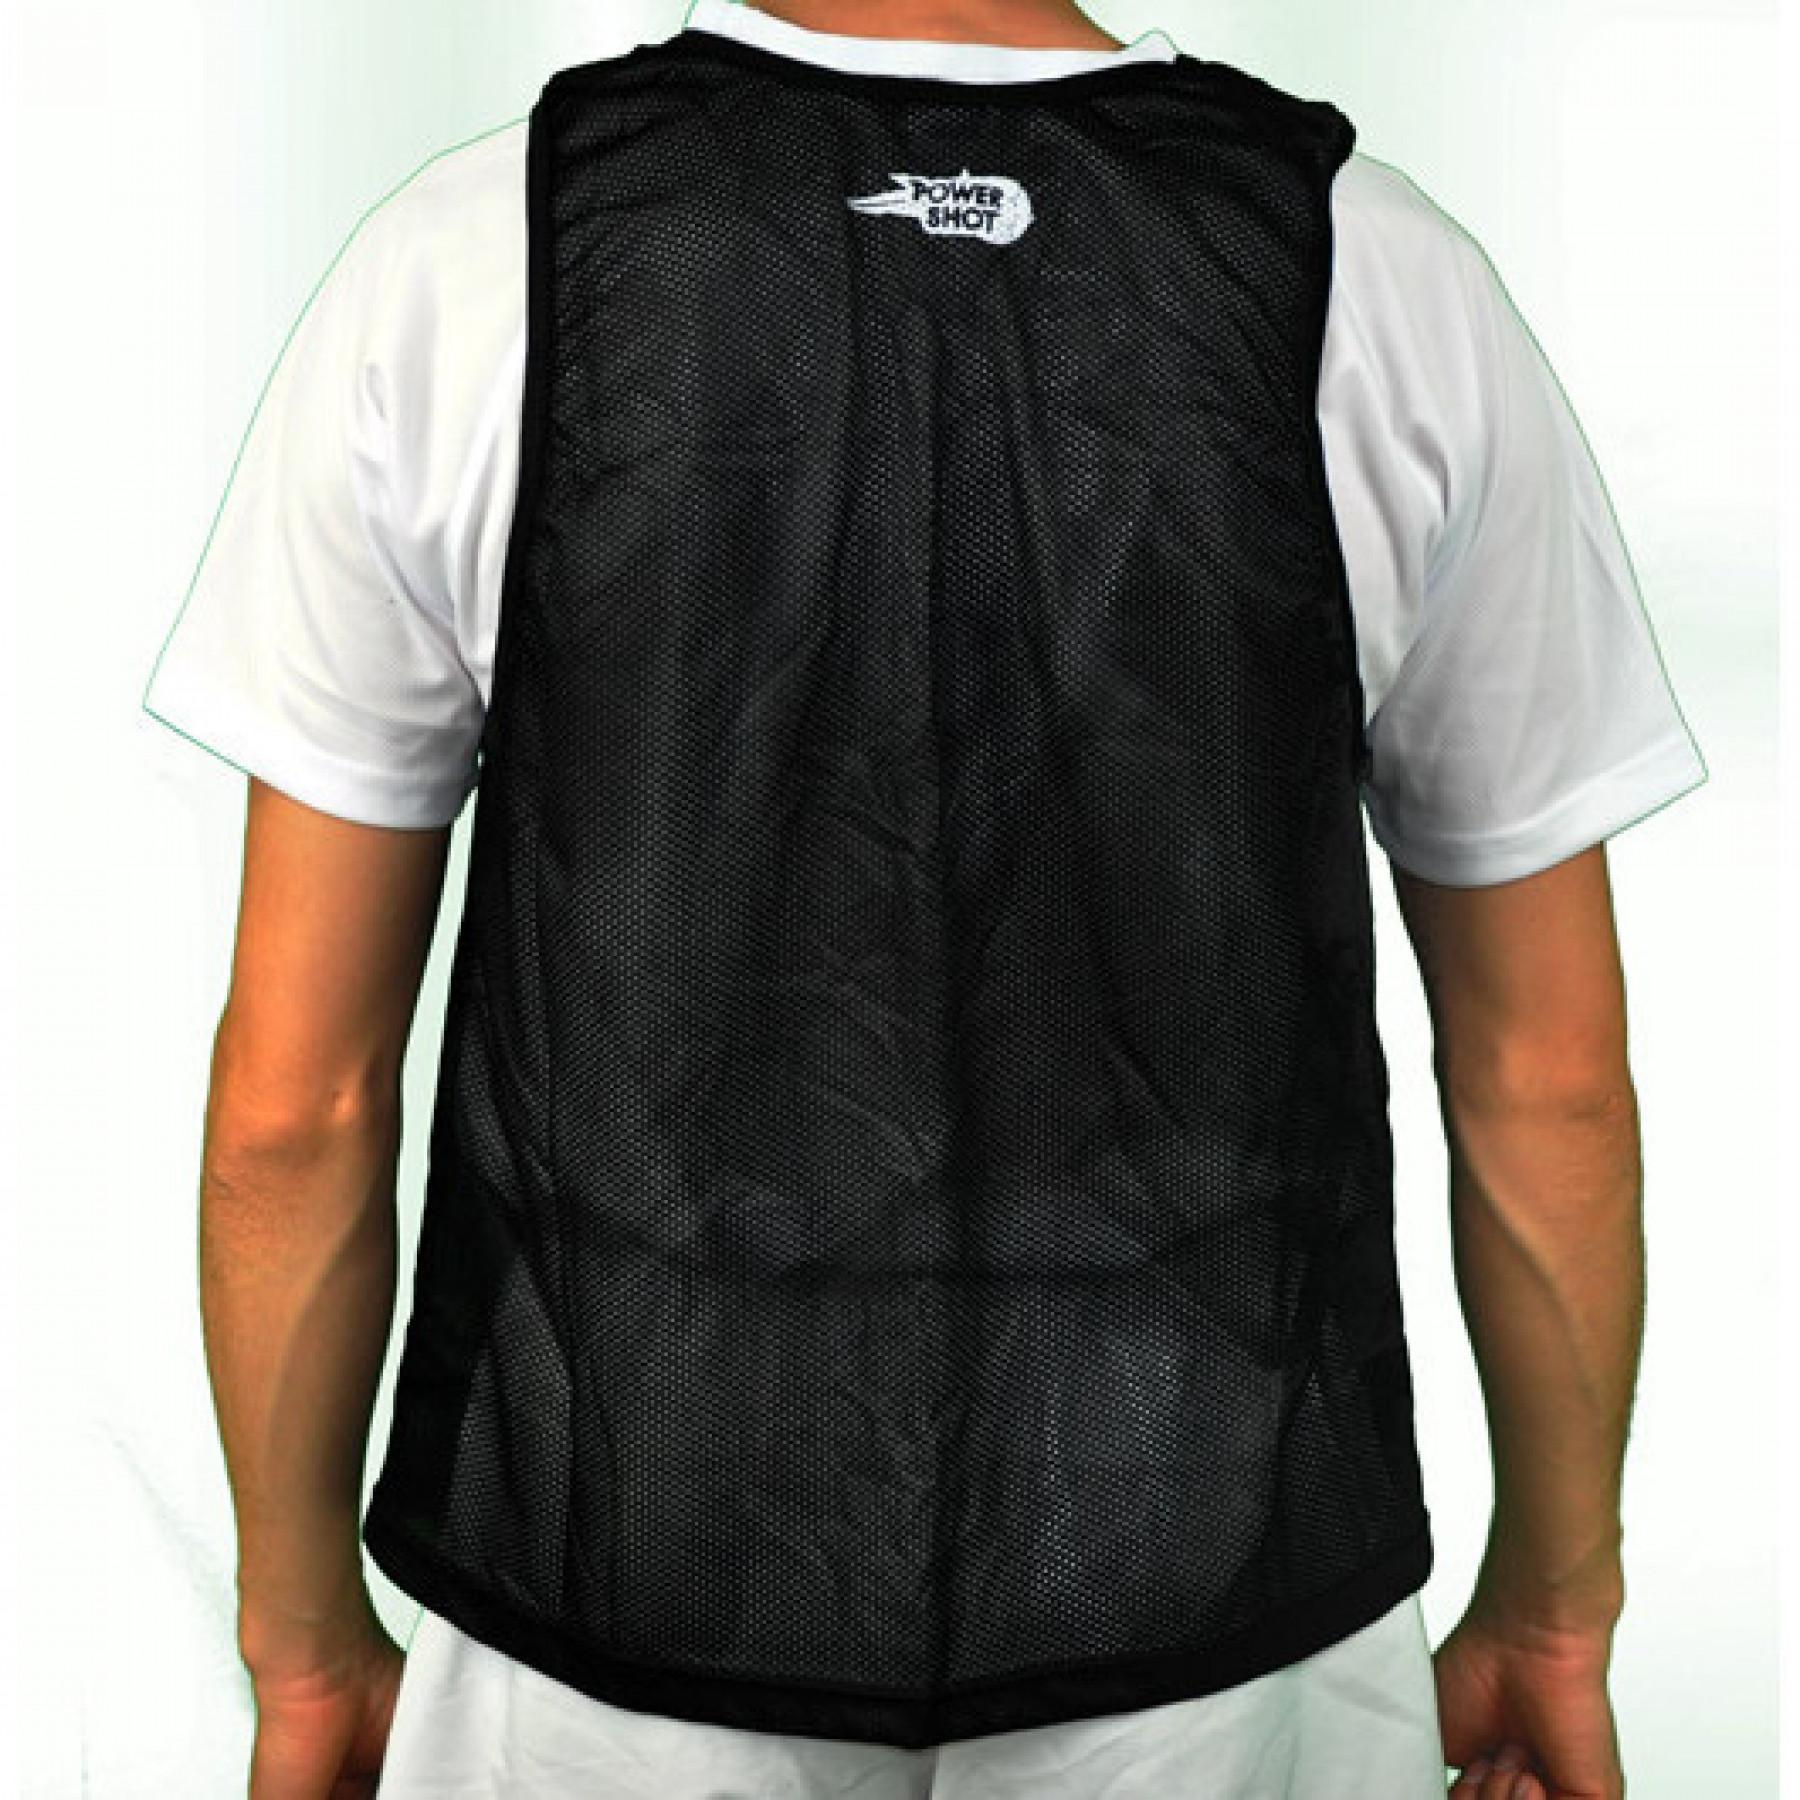 Adult training vest PowerShot